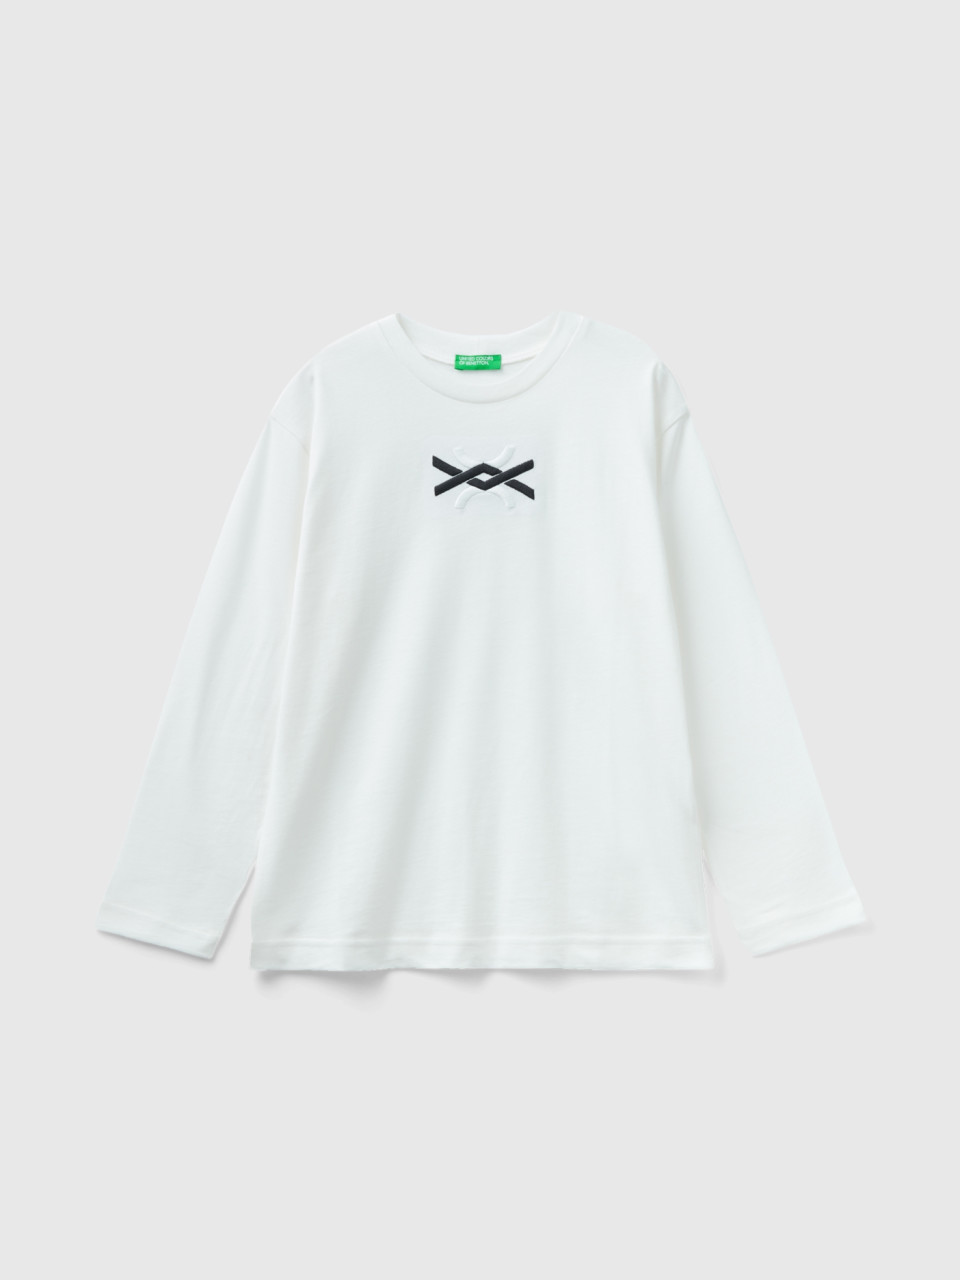 Benetton, Warm 100% Organic Cotton T-shirt, White, Kids